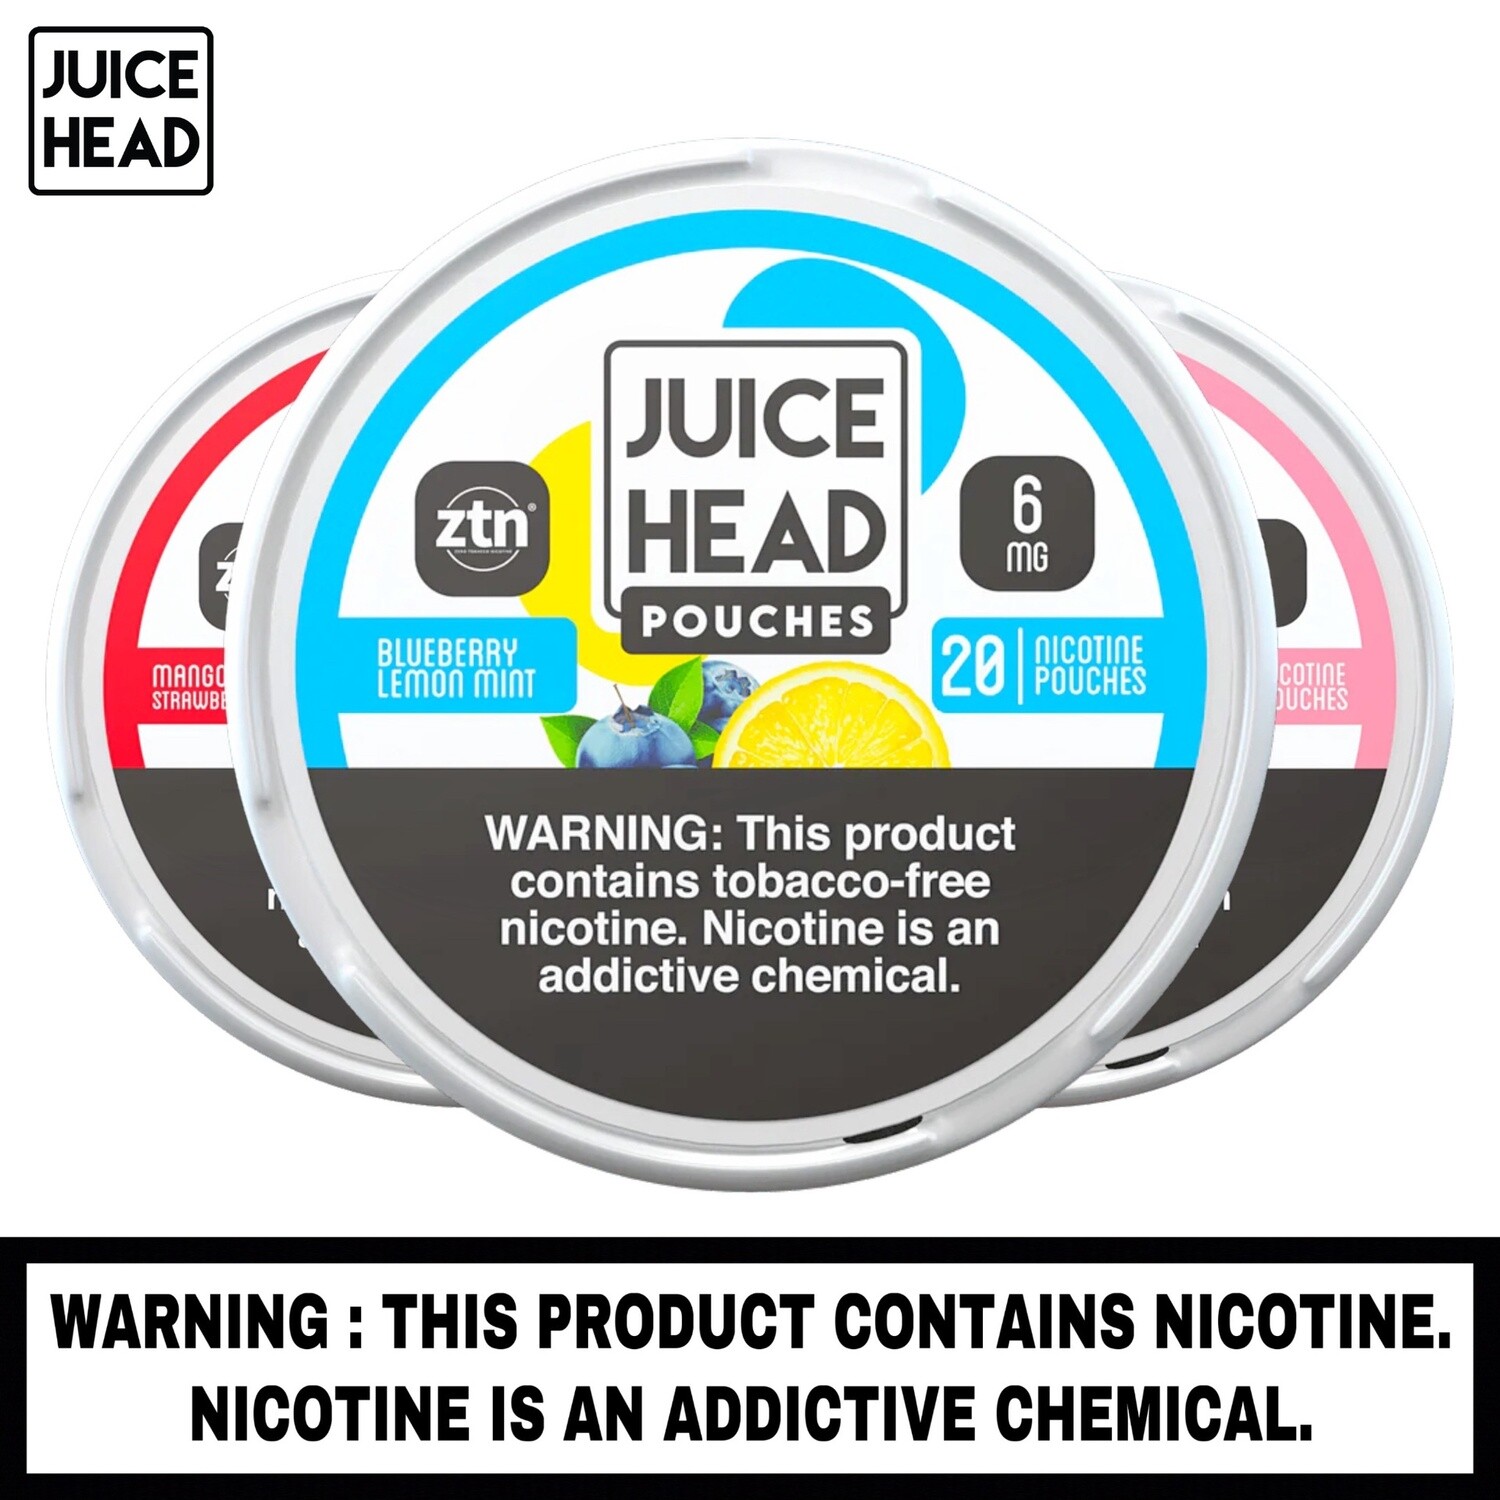 Juice Head™ Nicotine Pouches, Nicotine Strength: 6mg, Flavor: Blueberry Lemon Mint